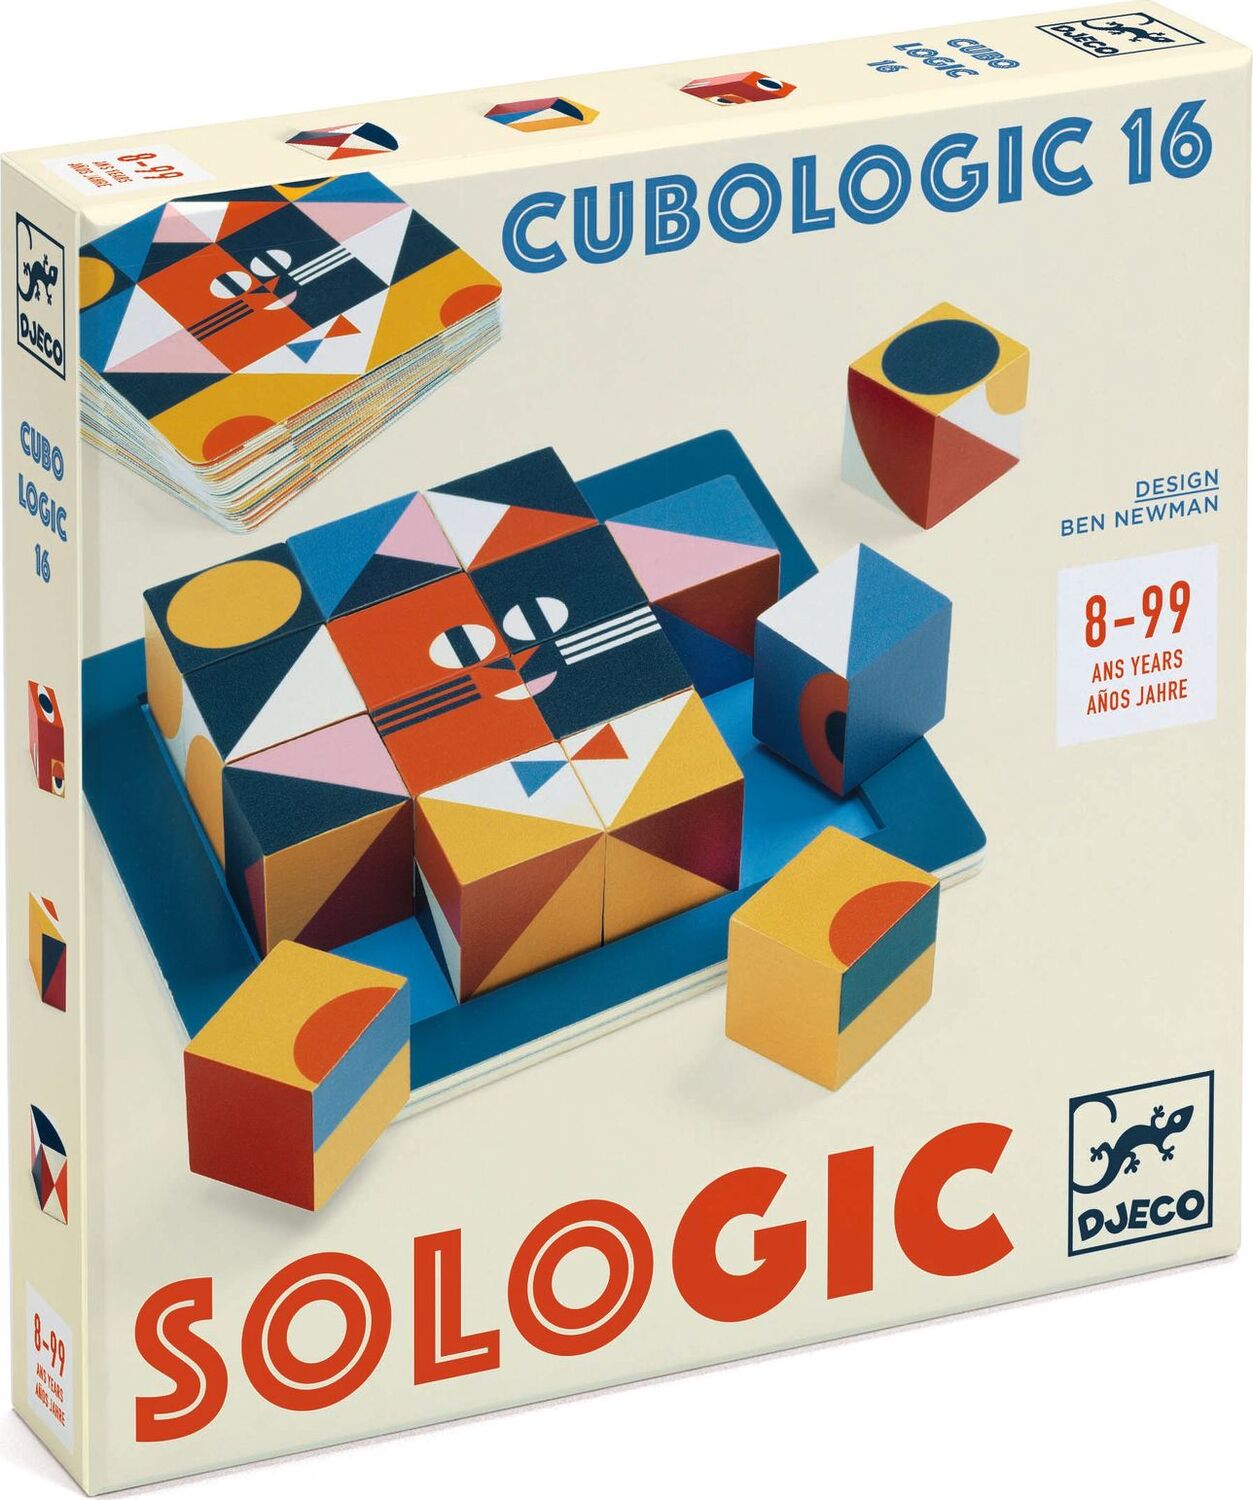 Cubologic 16 Sologic